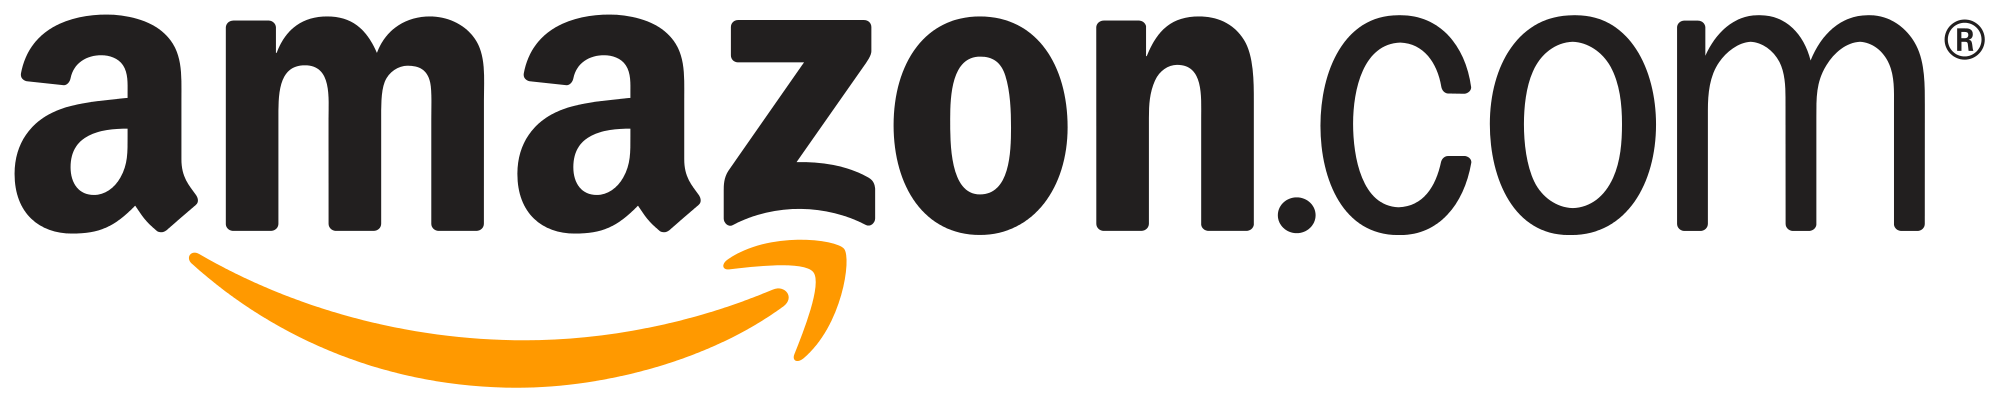 Amazon Books Logo - Amazon.com Logo